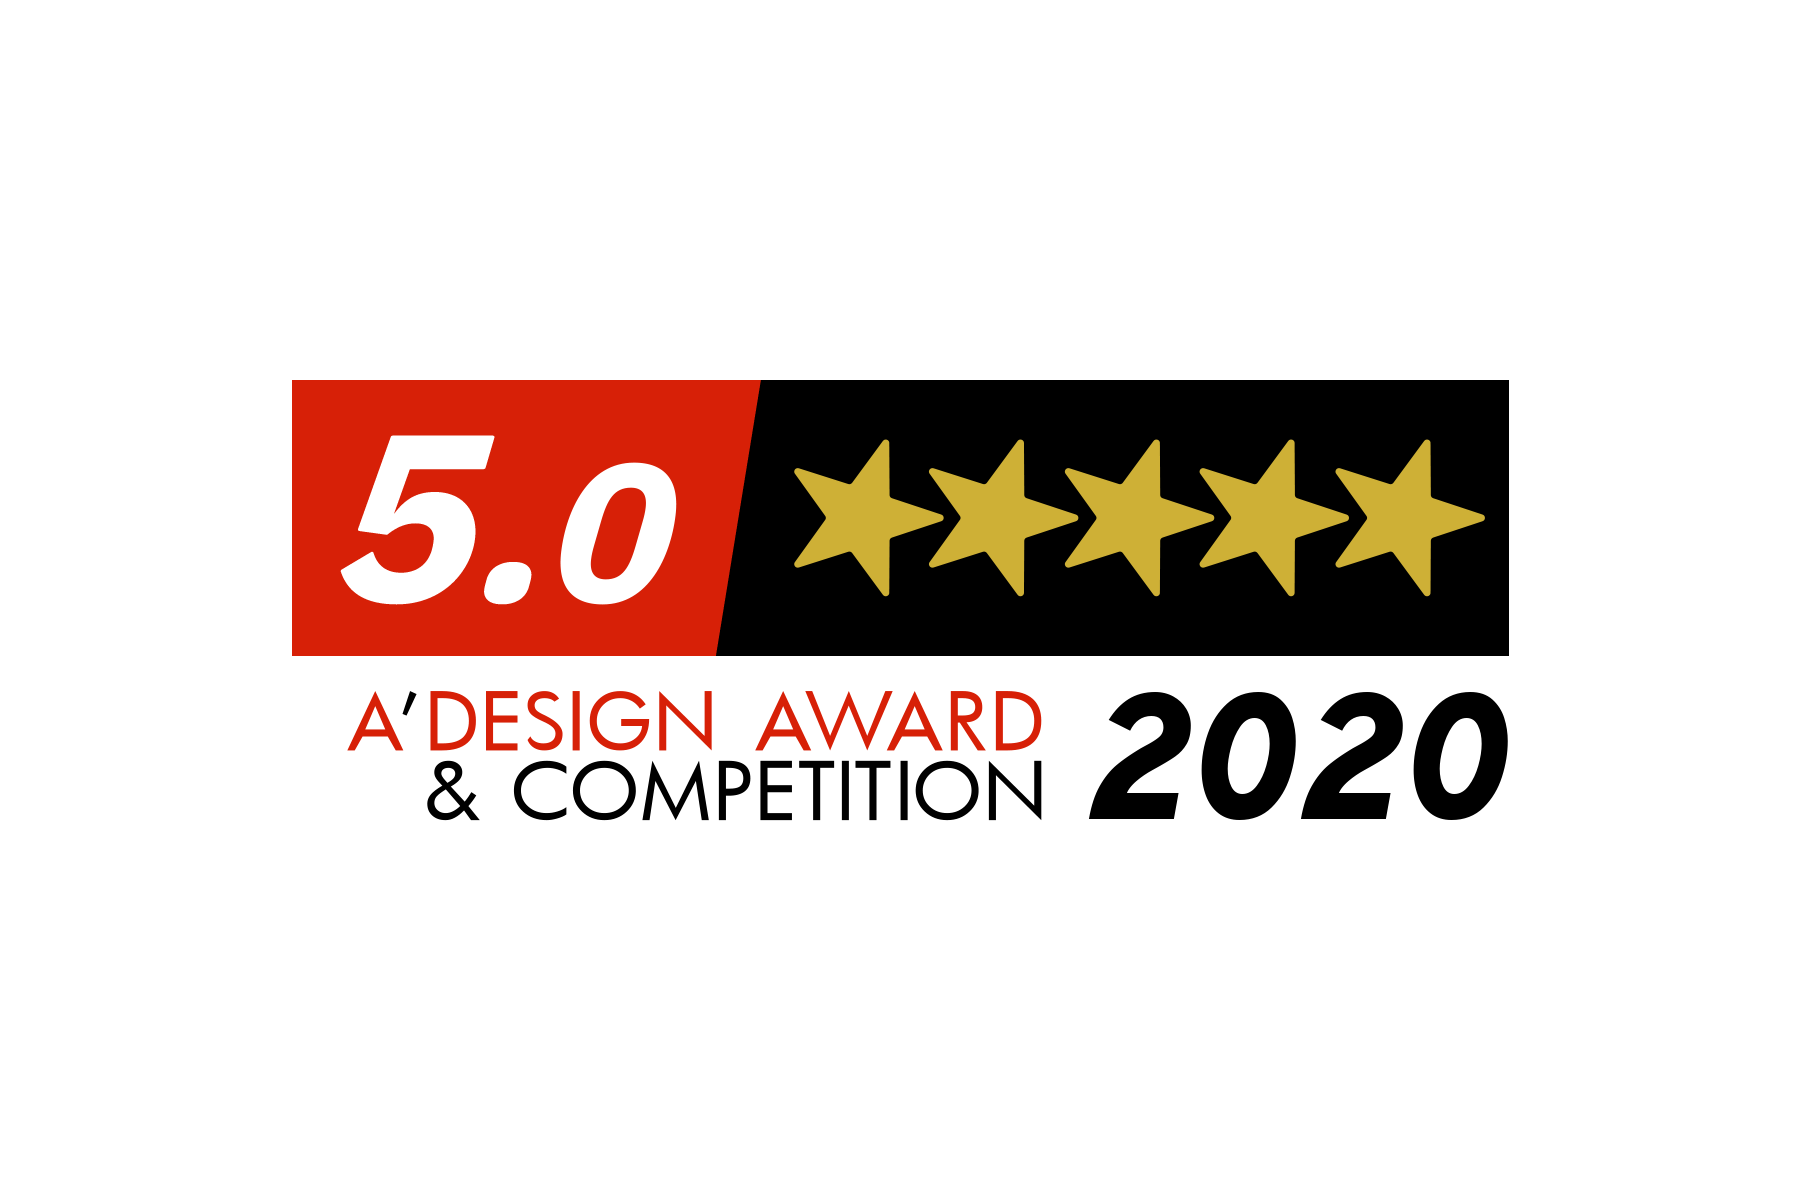 Platinum award from A'design